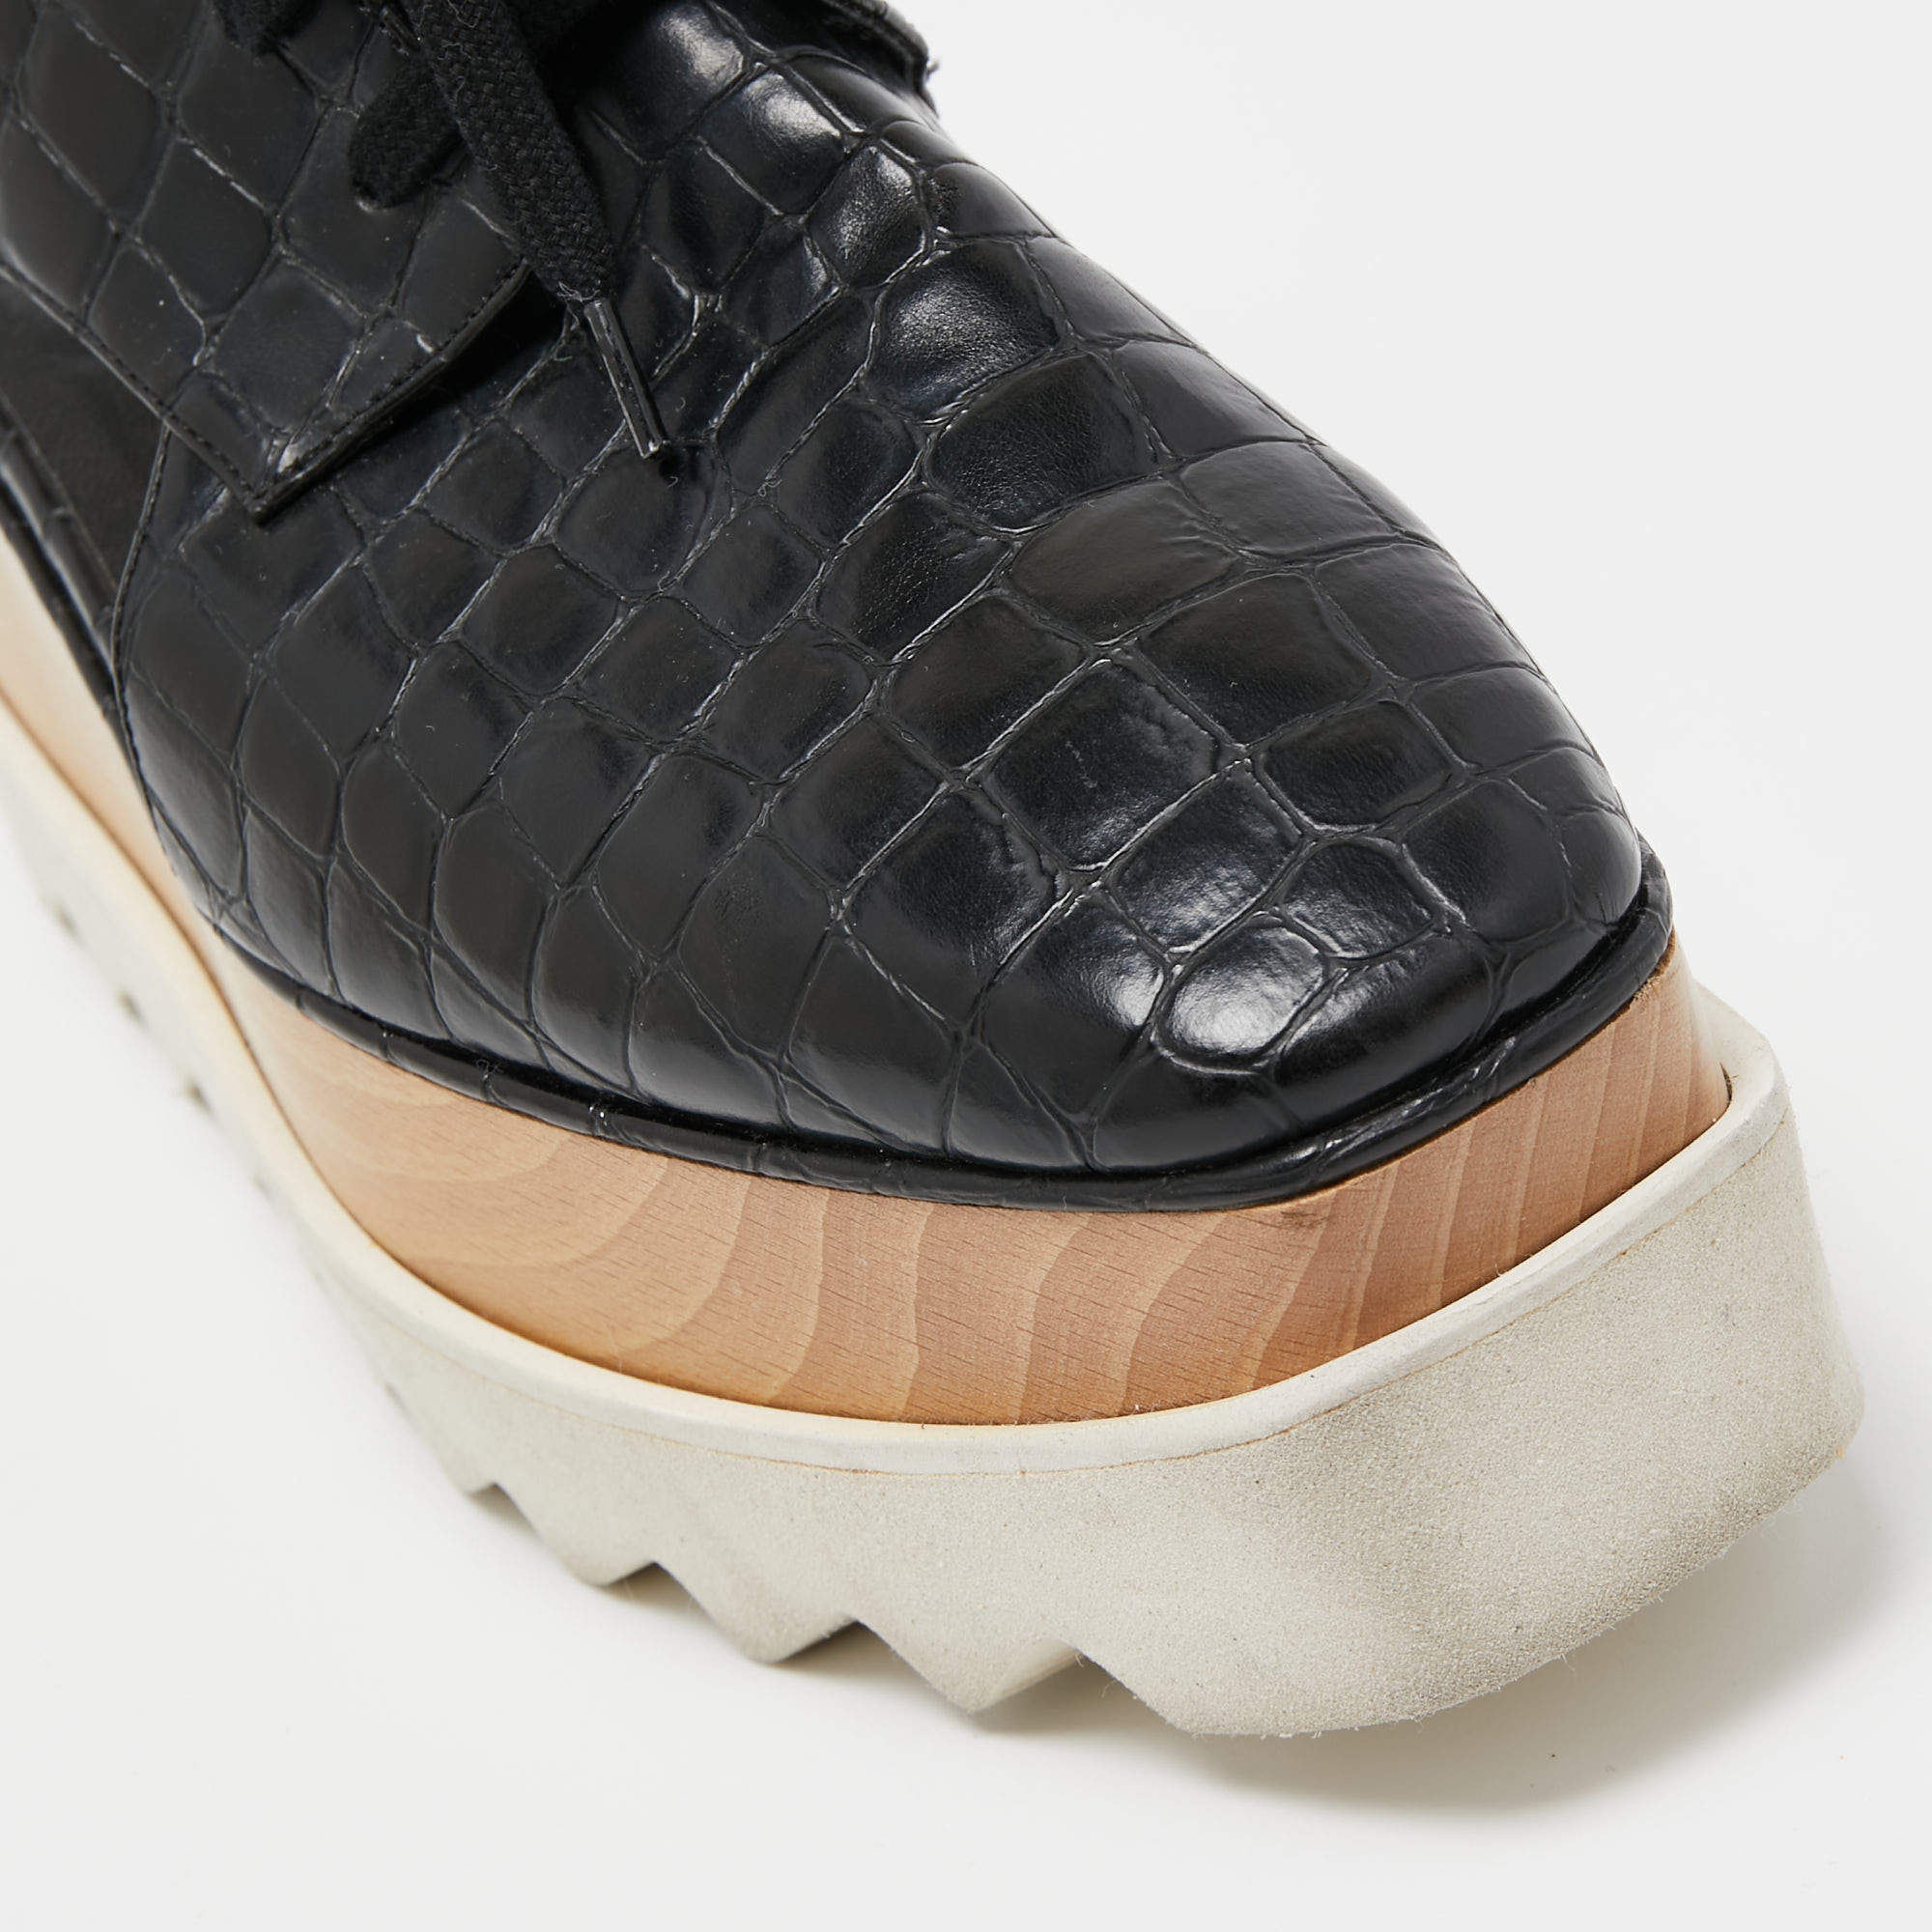 Stella McCartney Black Croc Embossed Leather Elyse Cut Out